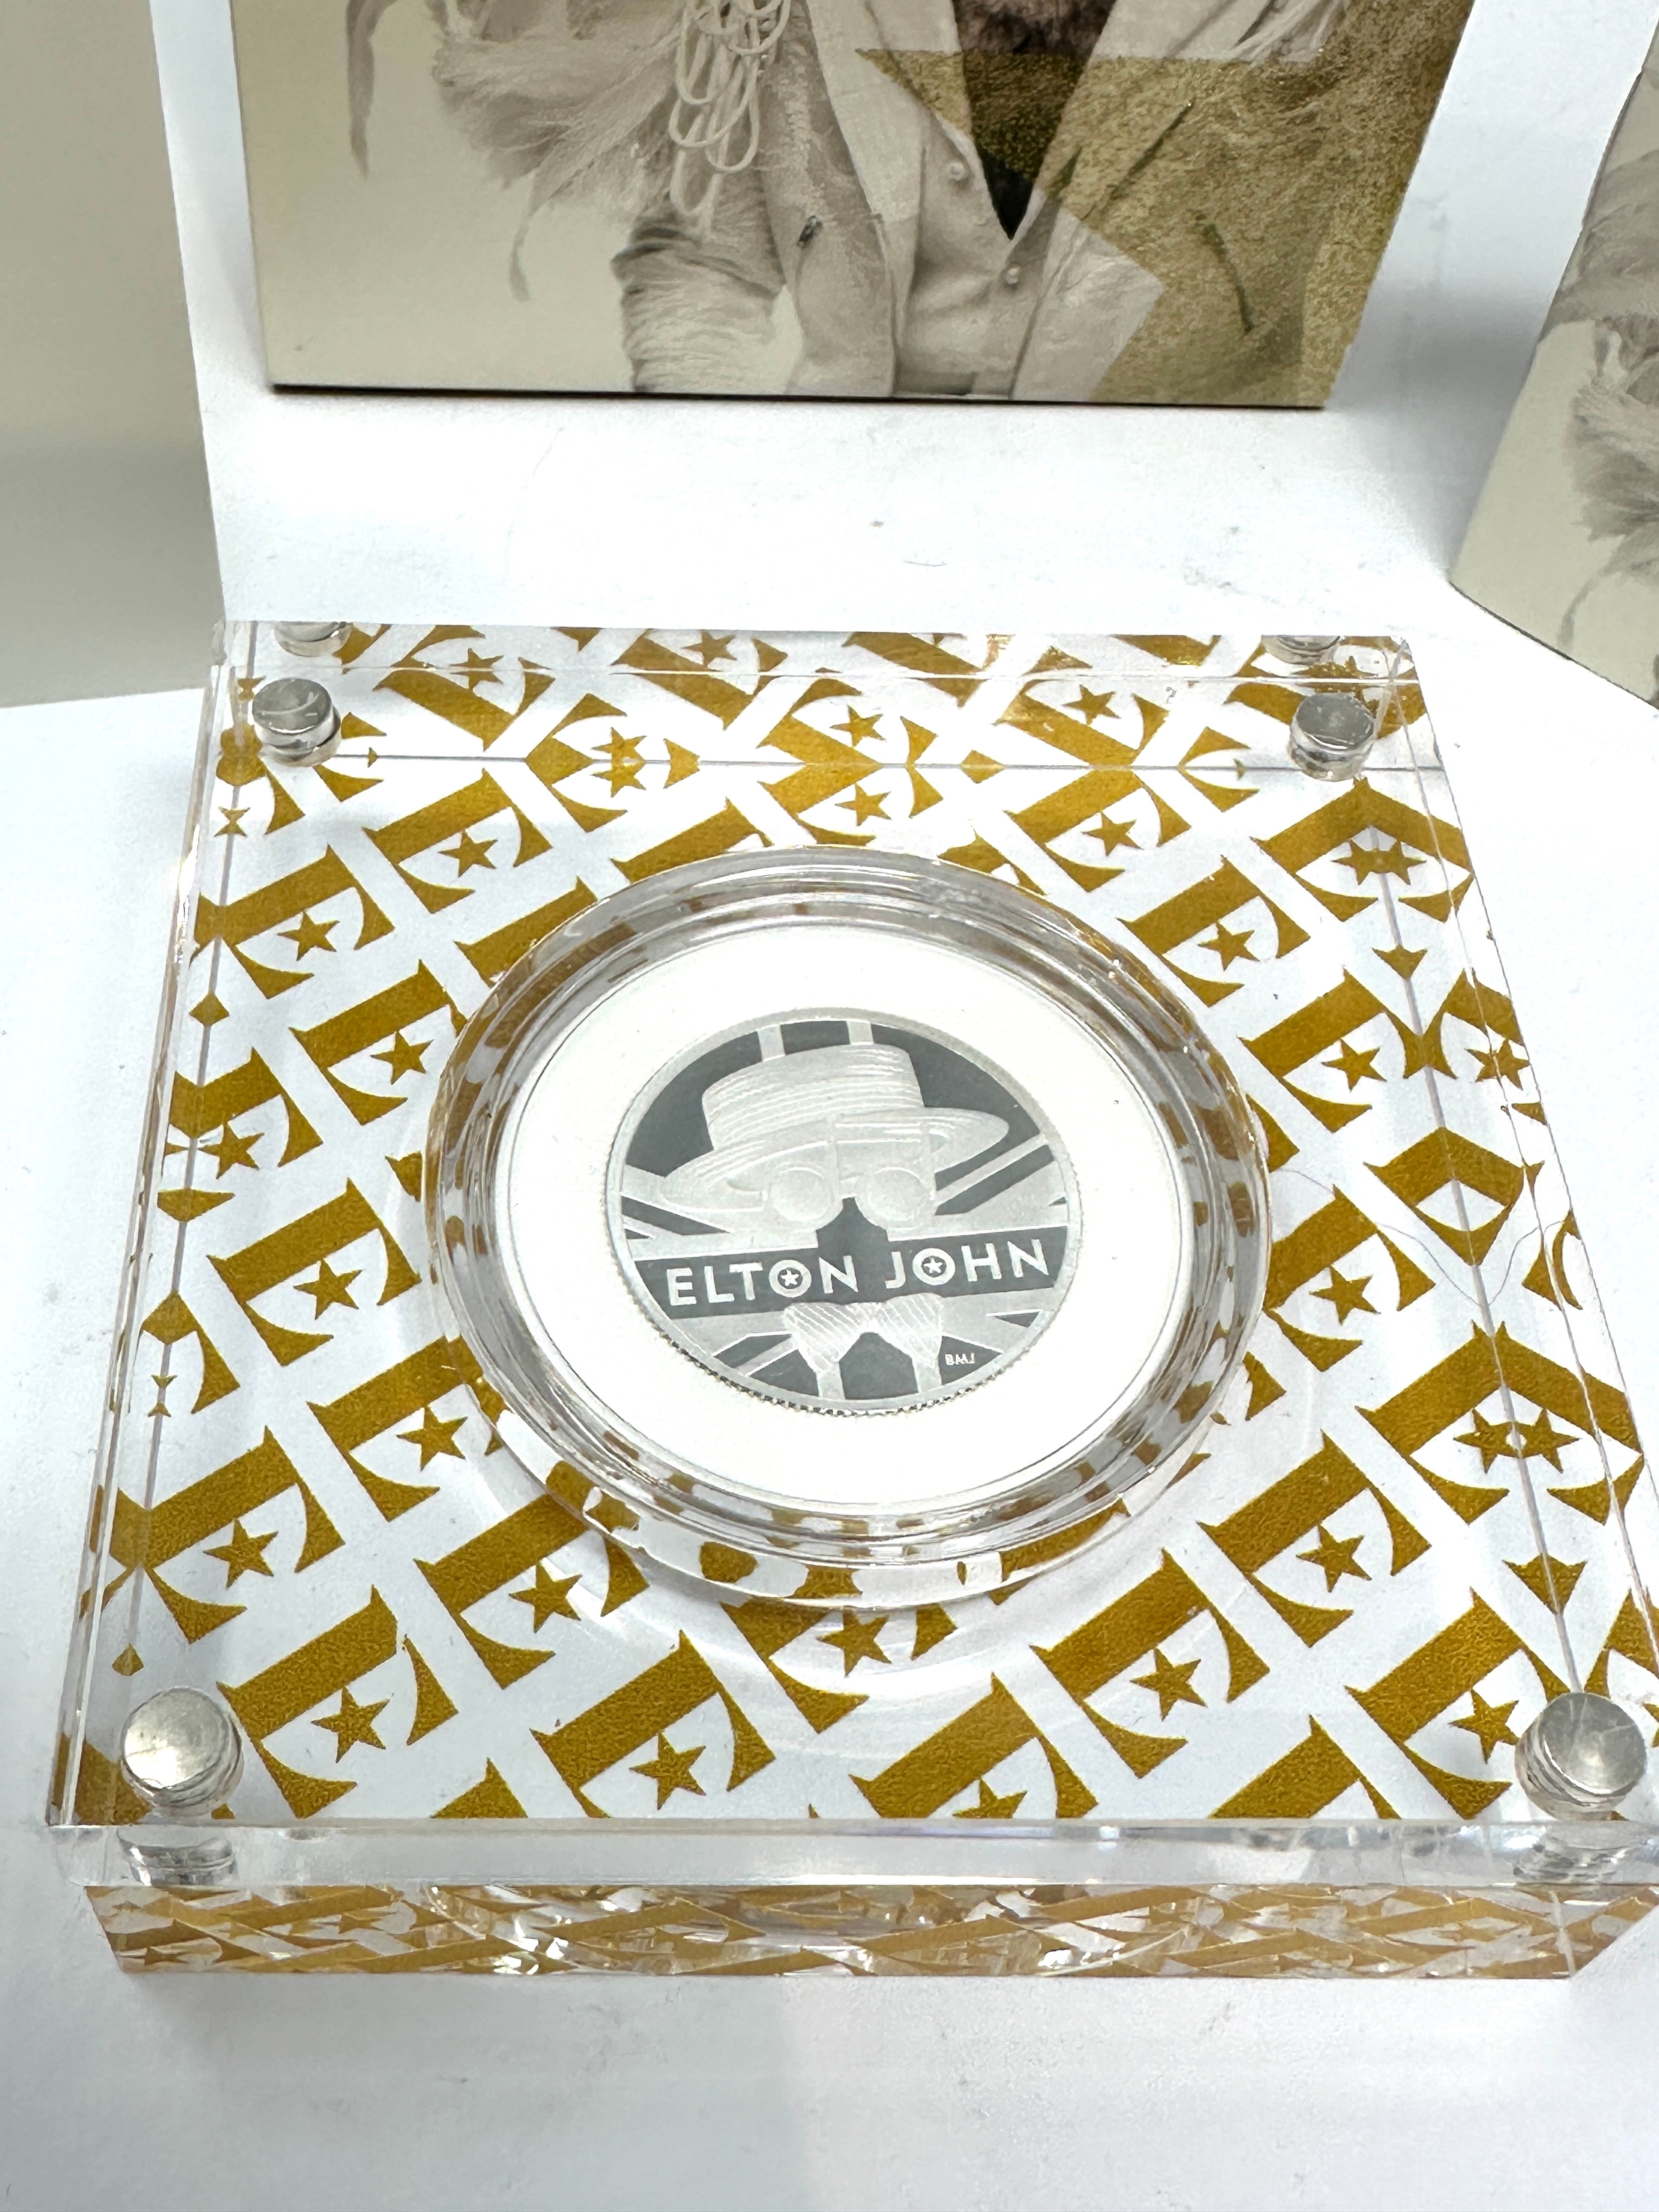 Elton John 2020 UK Half Ounce Silver Proof Coin Royal Mint - Image 2 of 4